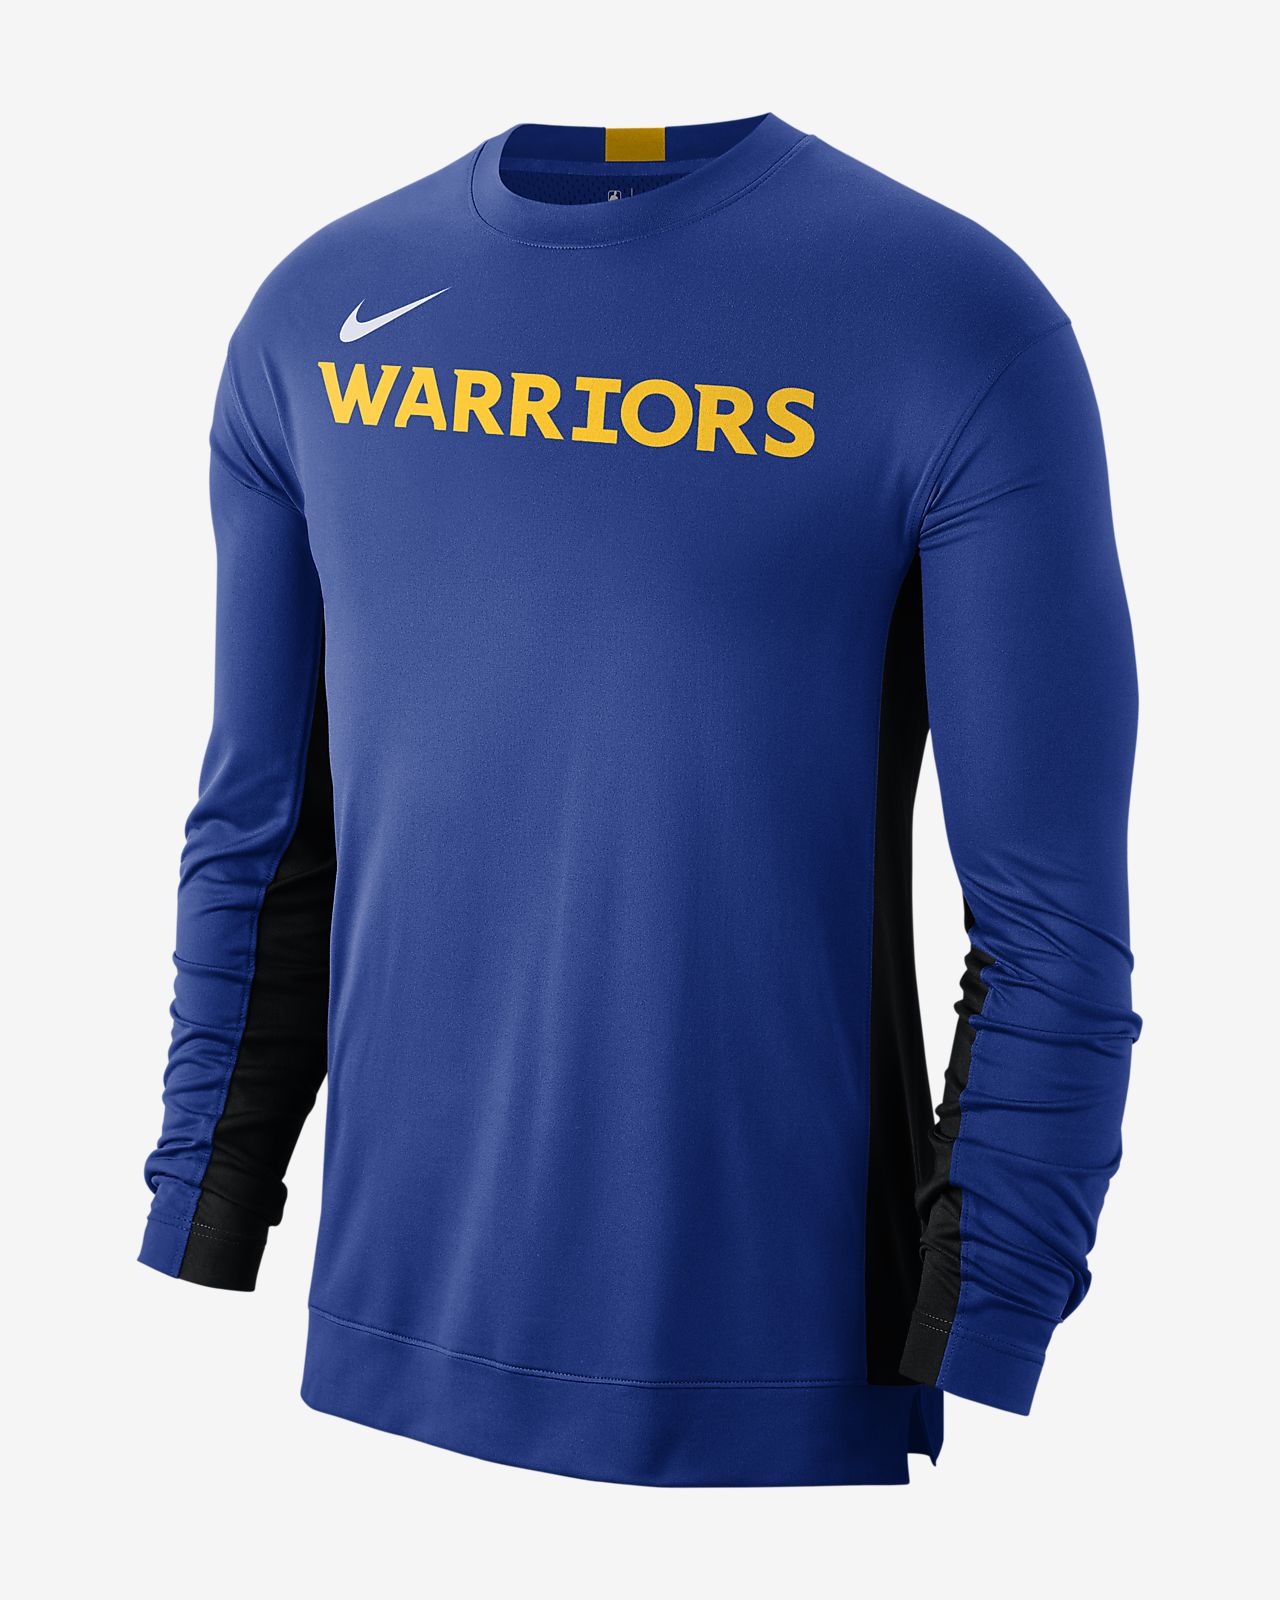 golden state warriors training jersey